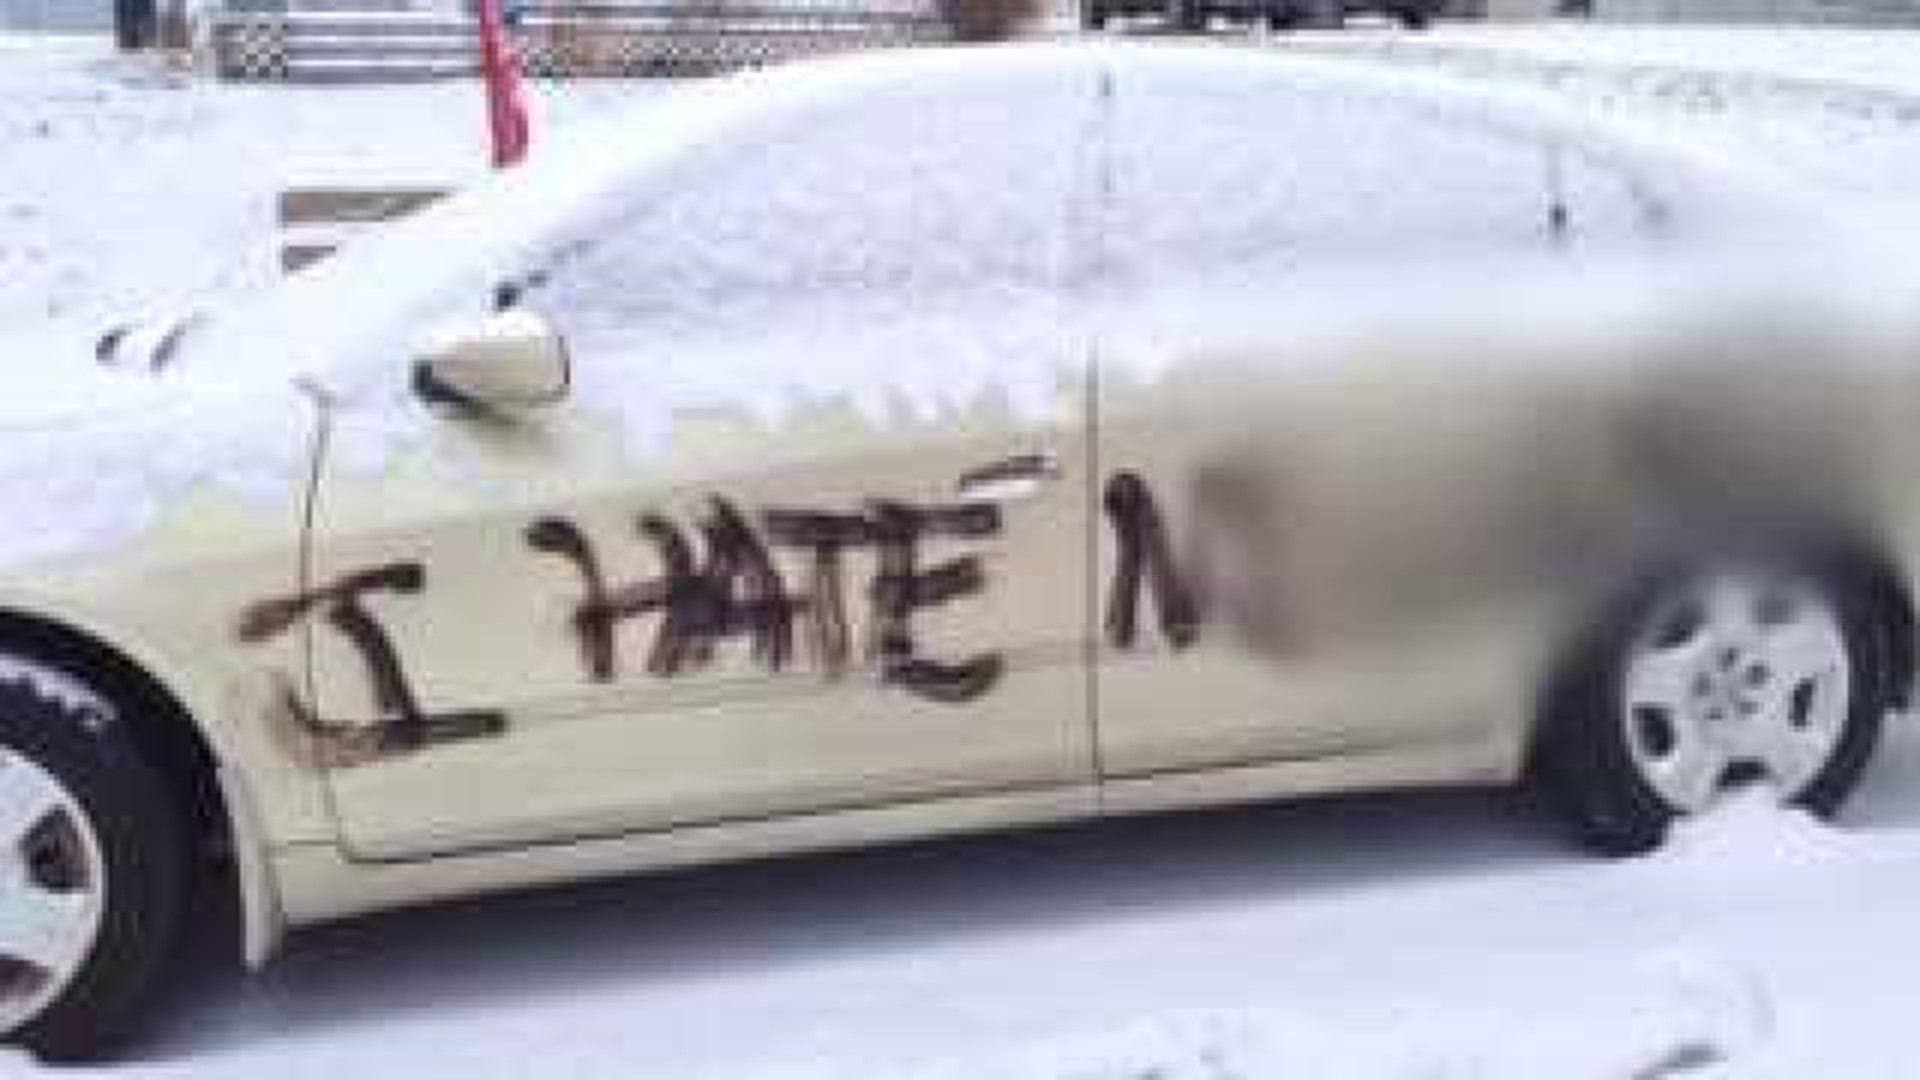 Racial slurs painted on cars in Davenport neighborhood